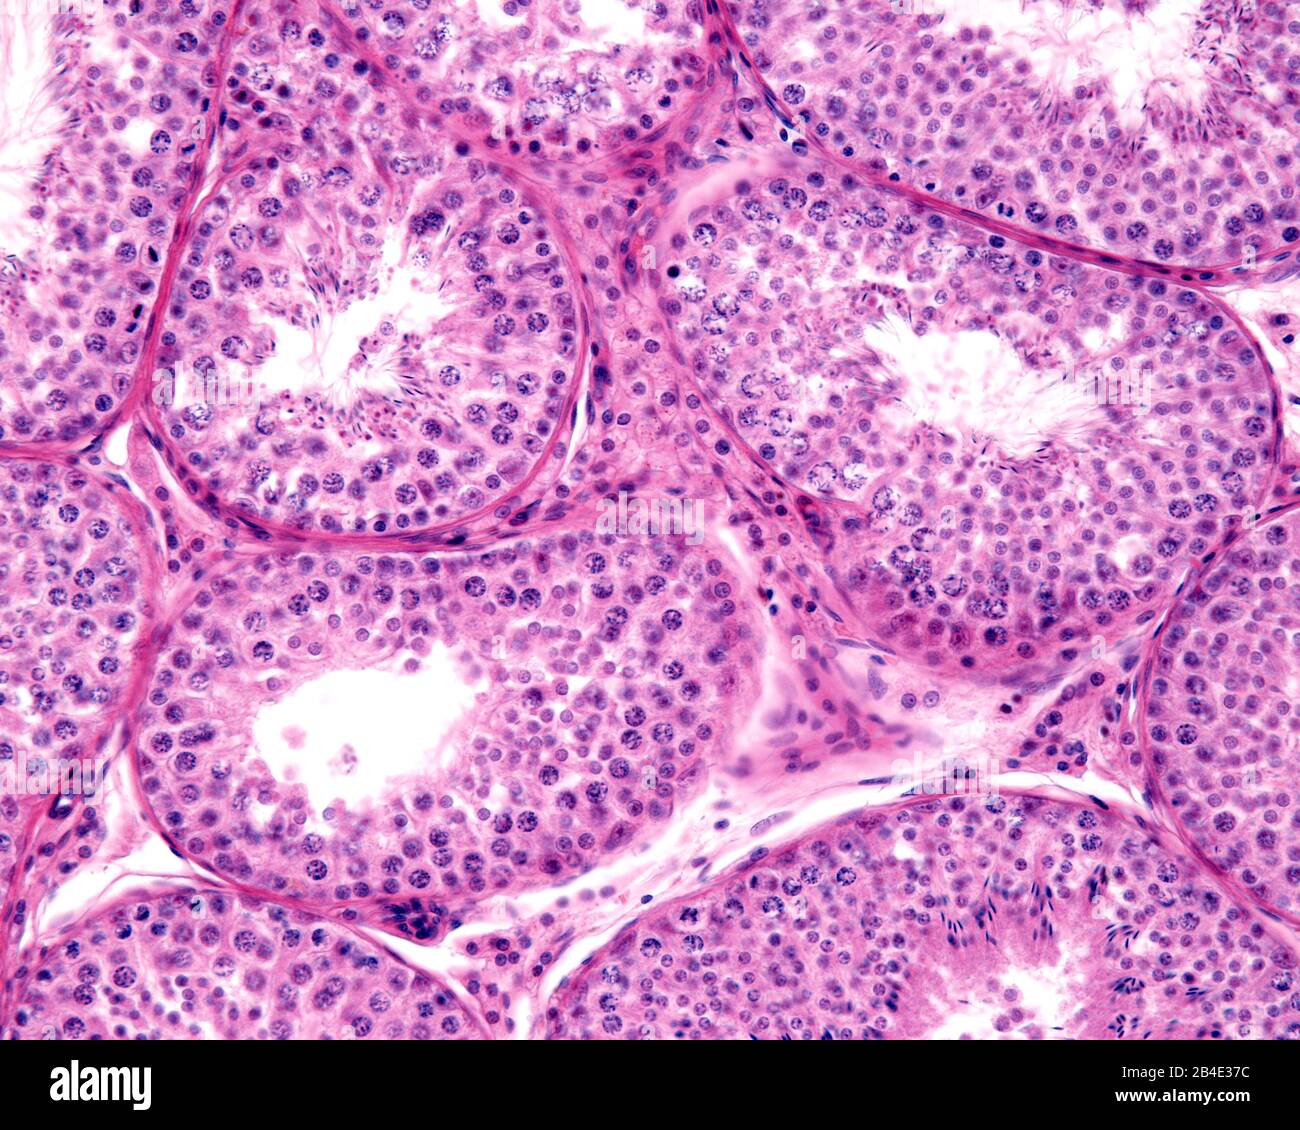 Seminiferous tubules of human testis. Male germinal epithelium shows spermatogonia, spermatocytes in meiosis, spermatids, and spermatozoa with tails p Stock Photo